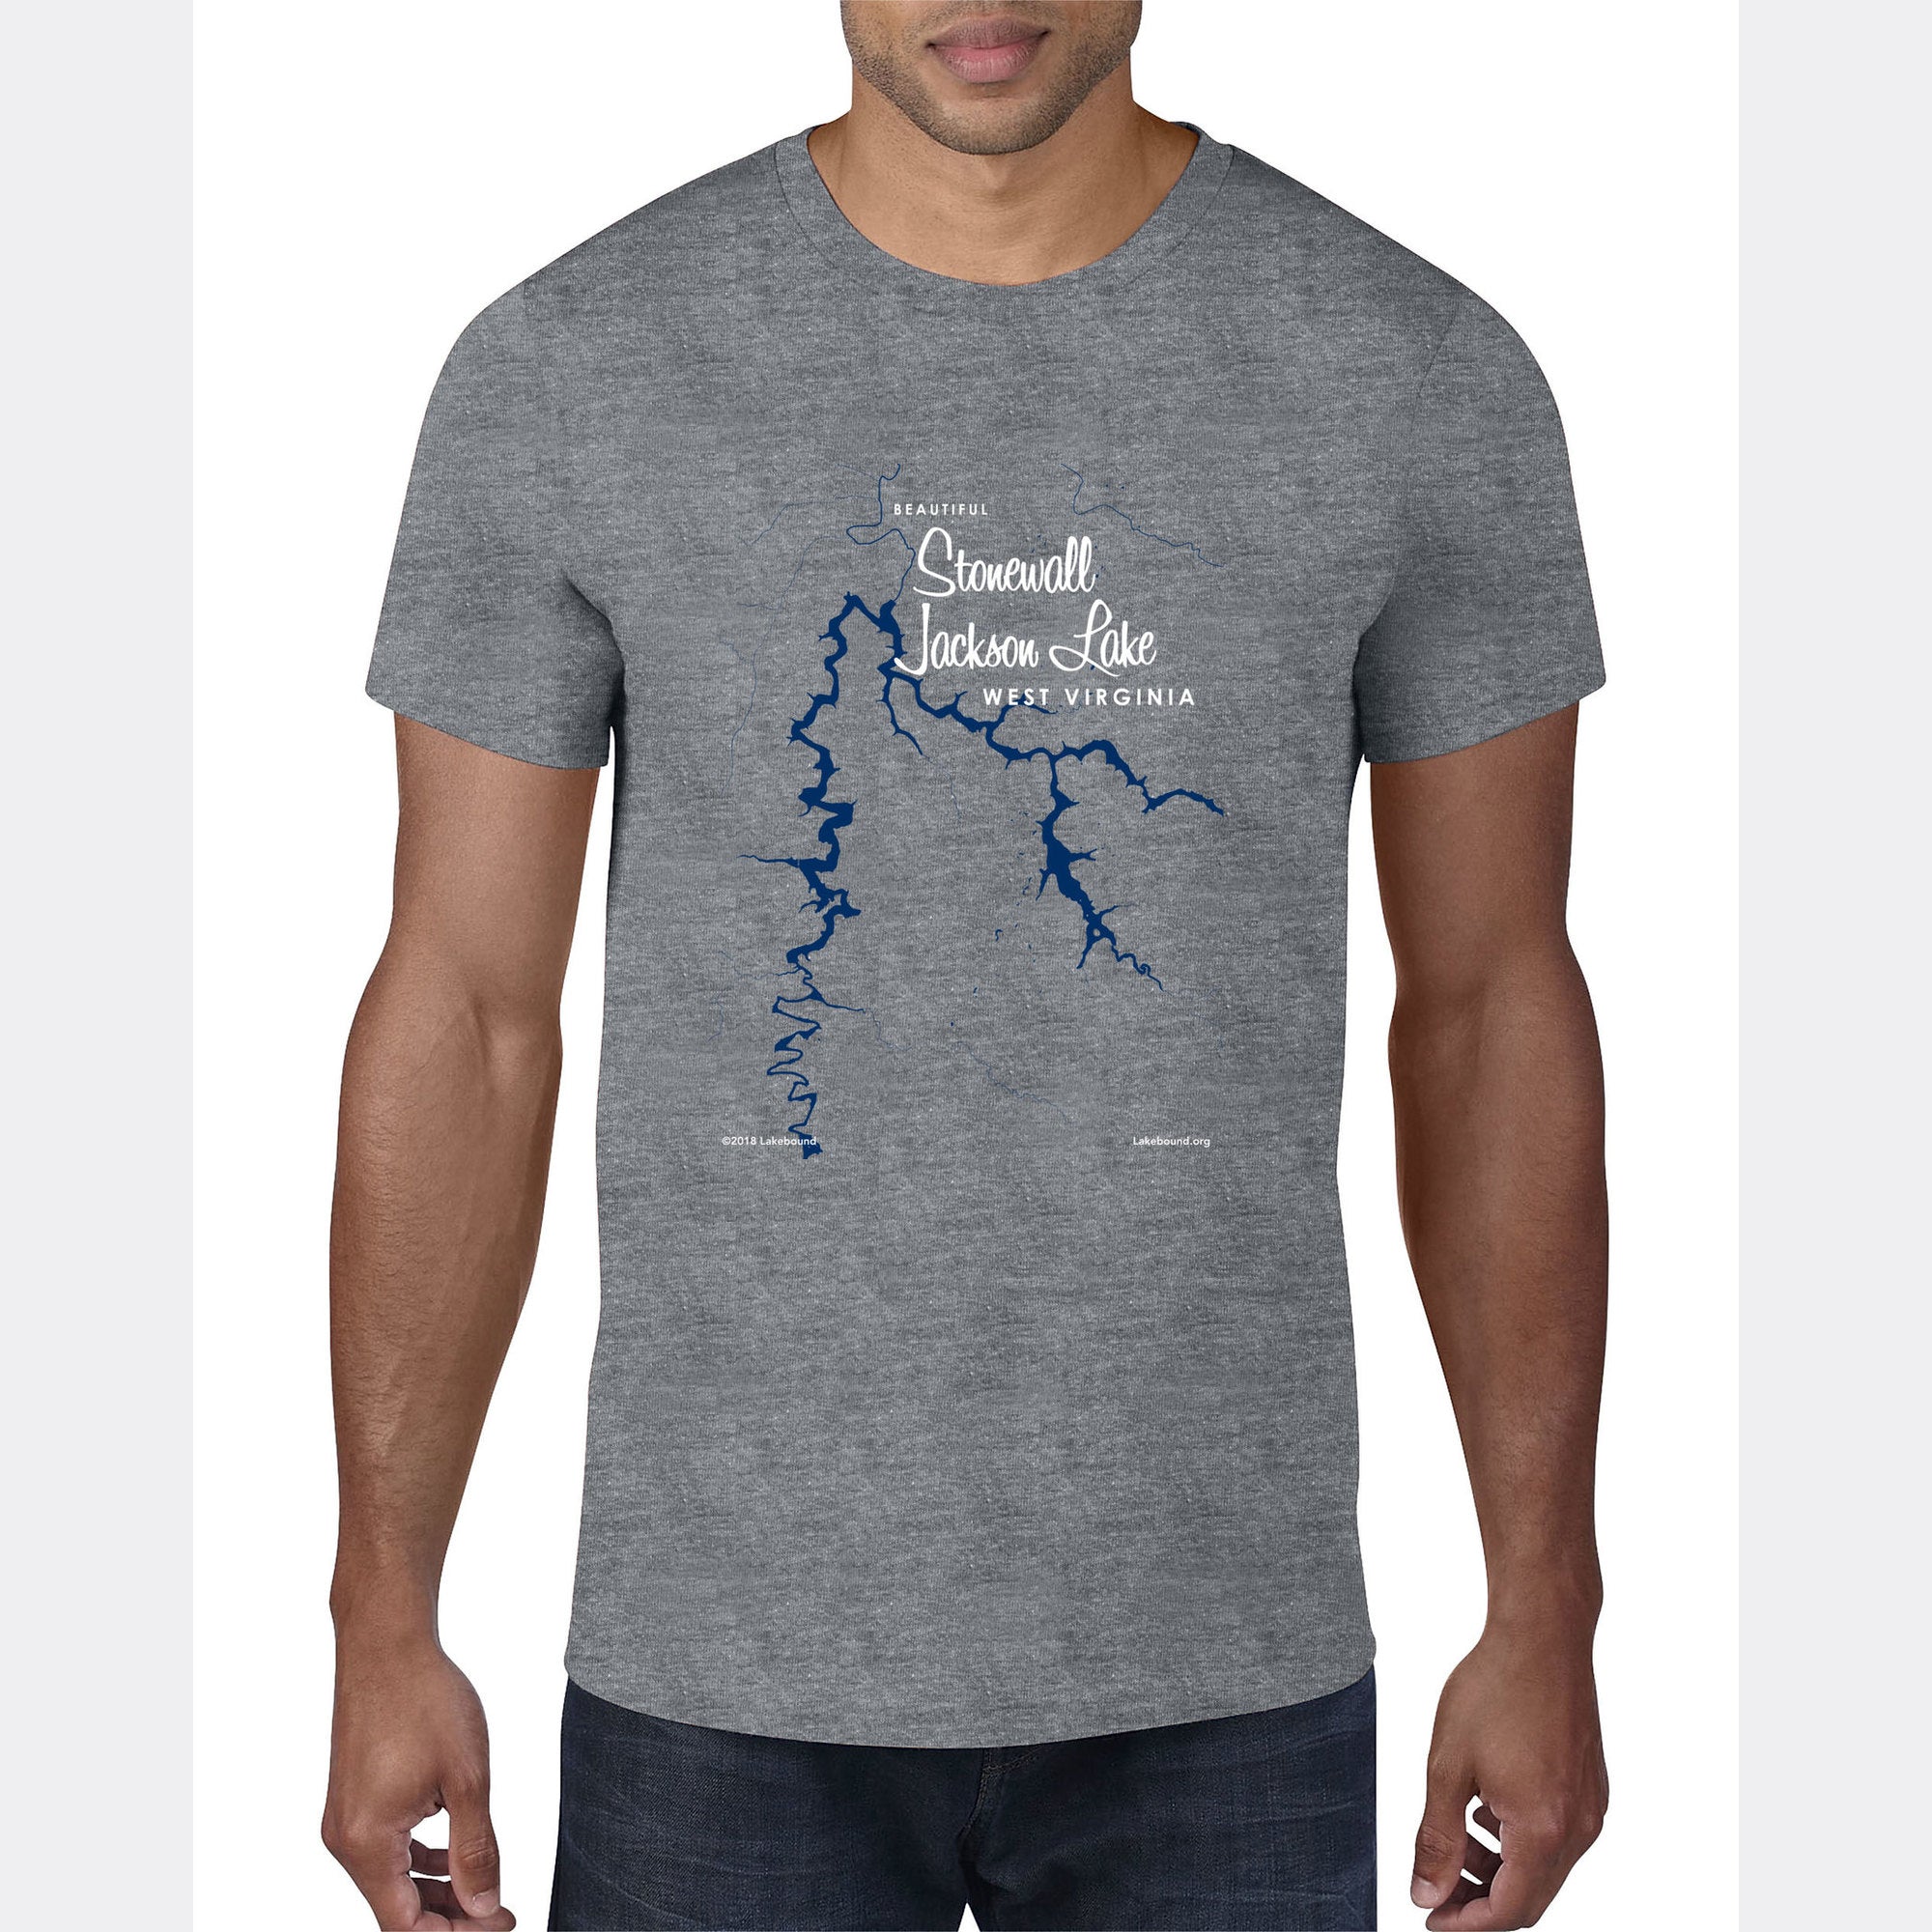 Stonewall Jackson Lake West Virginia, T-Shirt